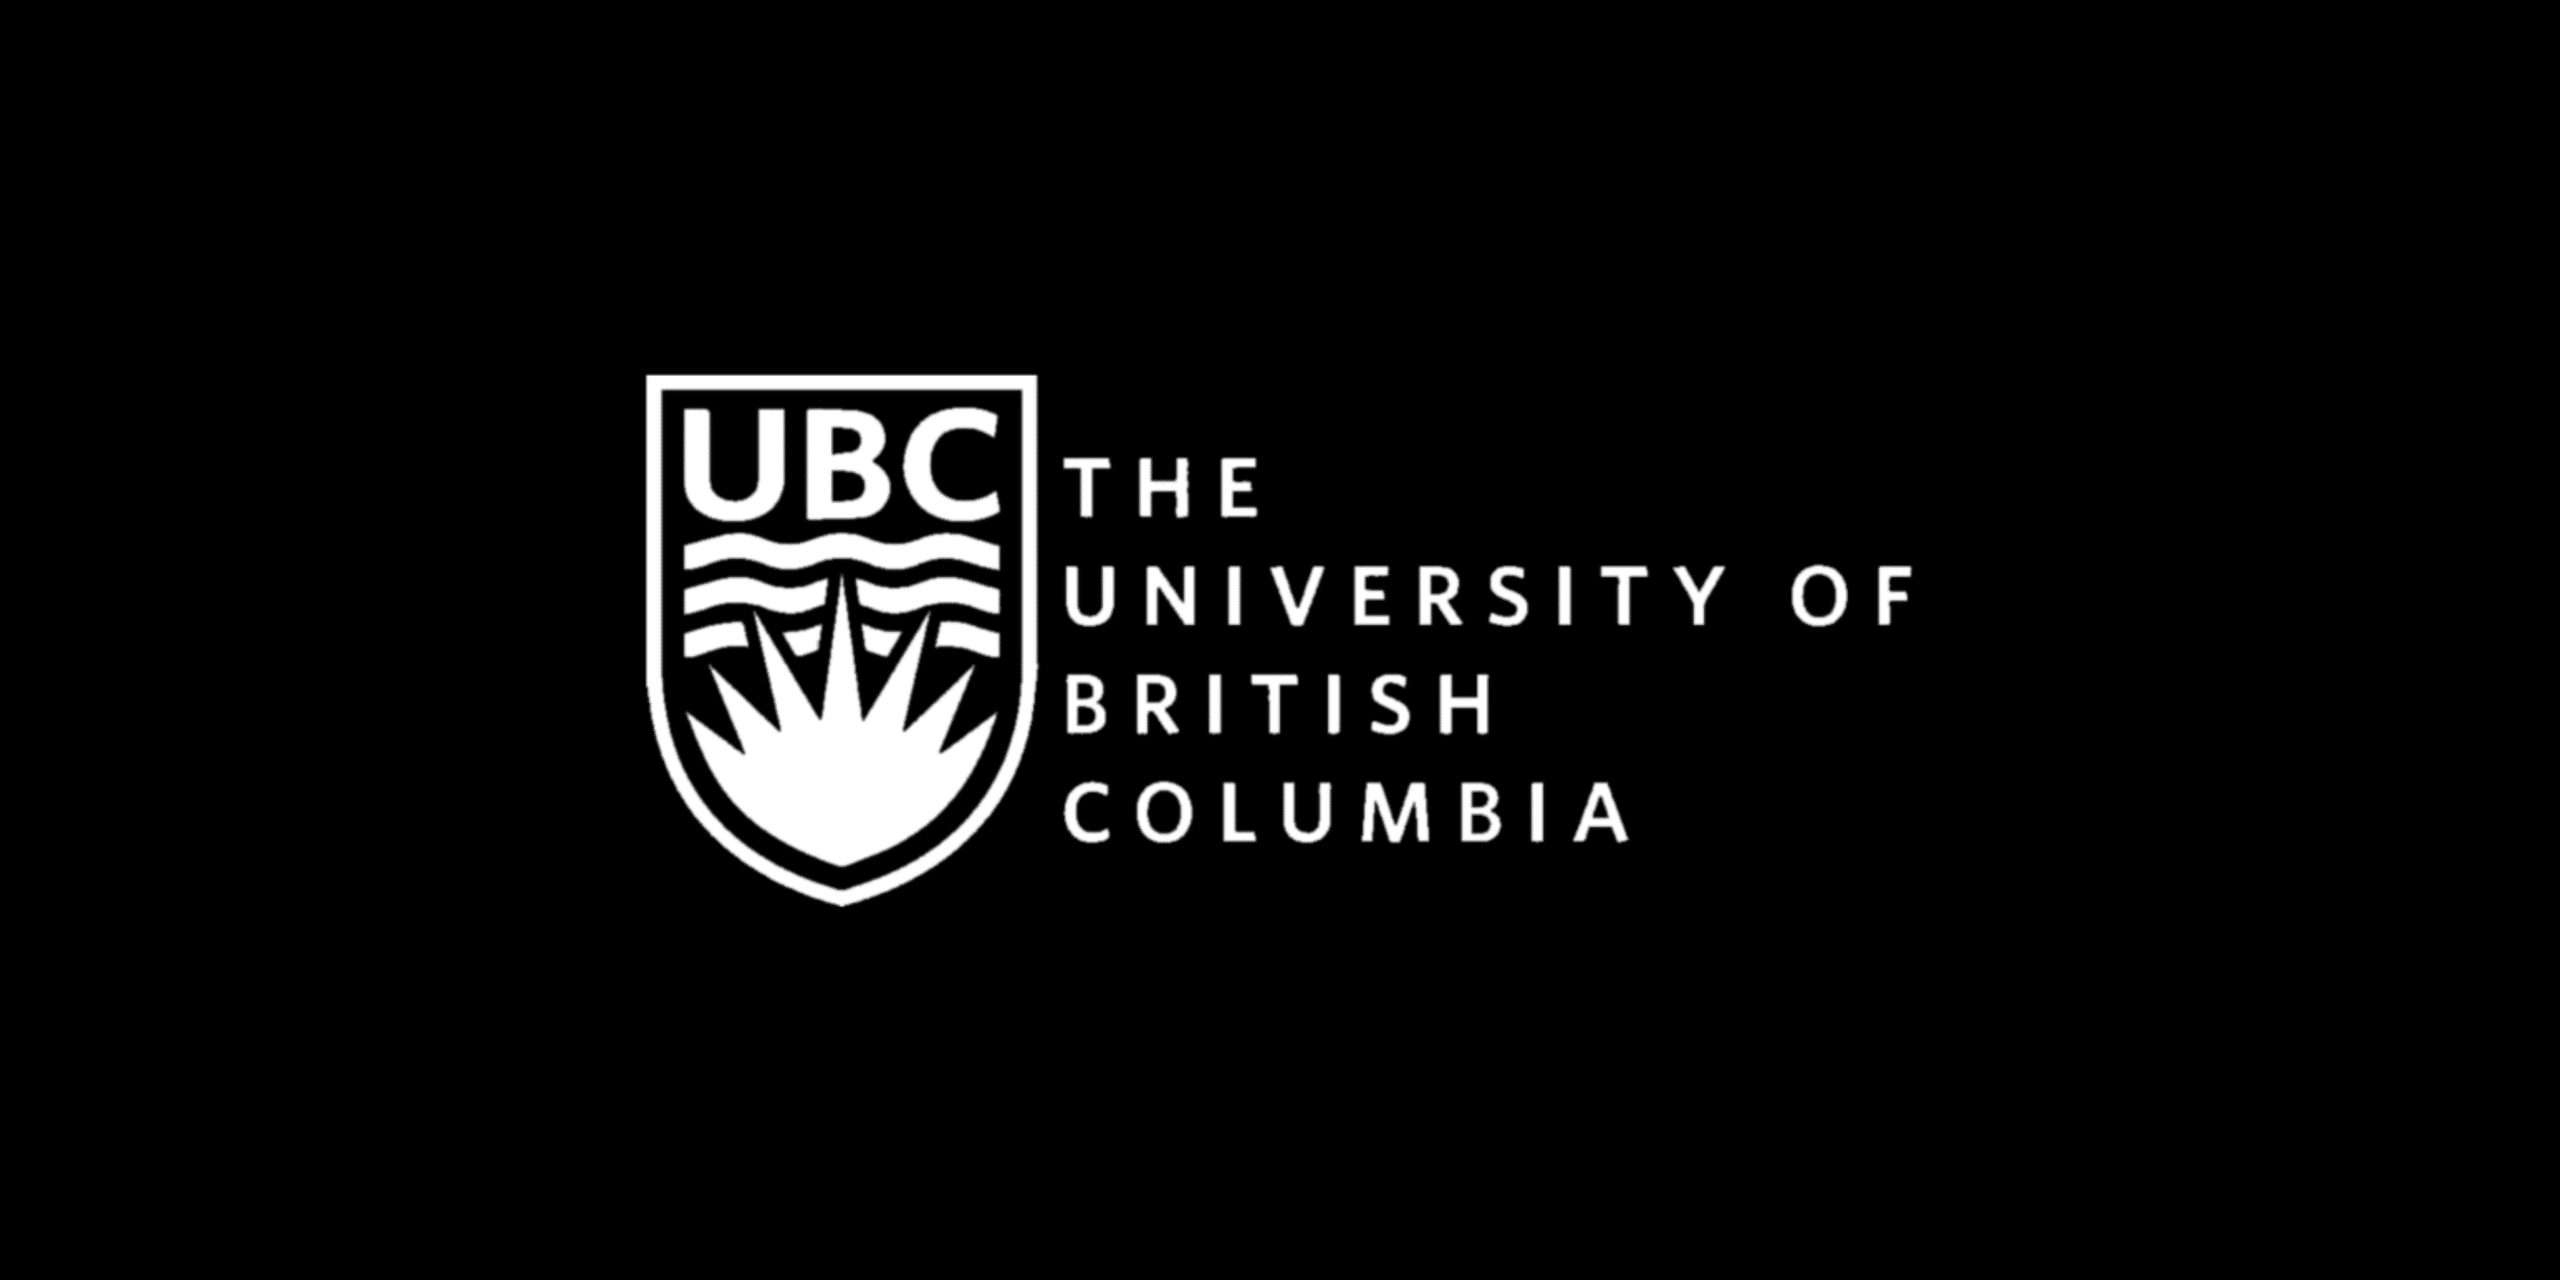 University of British Columbia uses Grid.ai